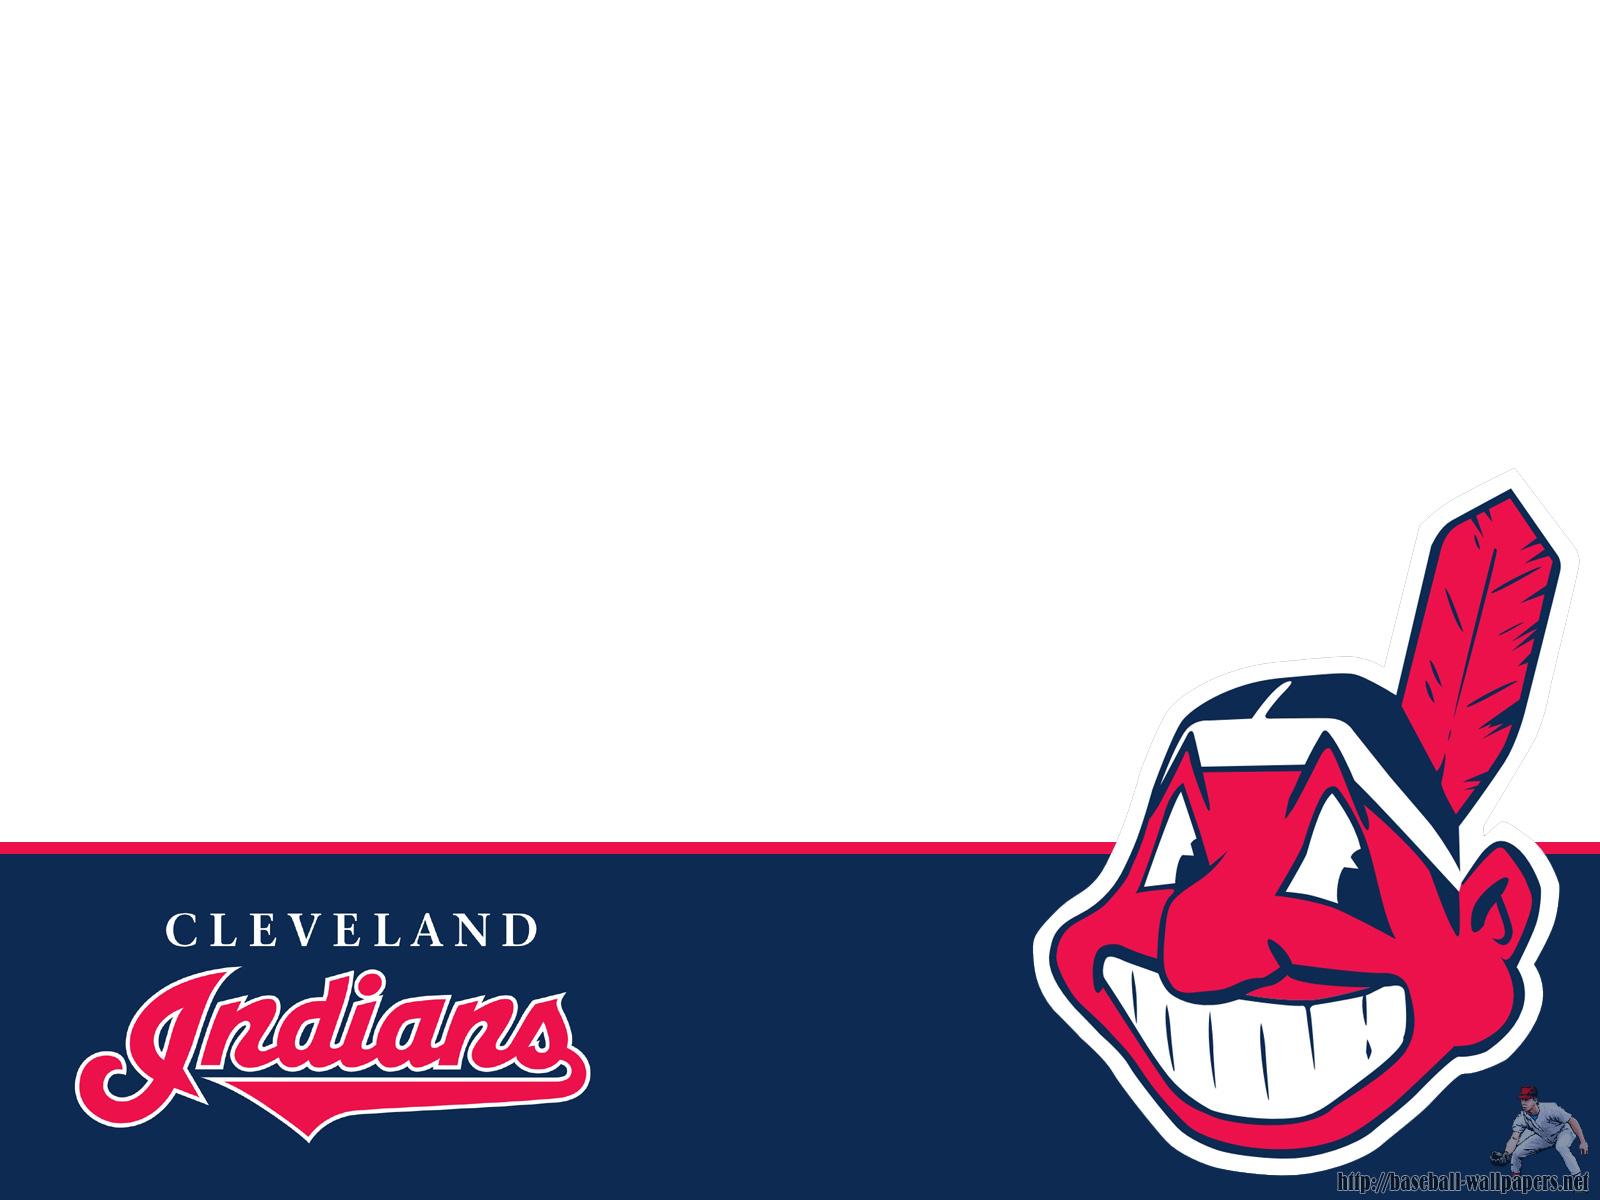 Cleveland Indians Mlb Baseball 4 Wallpapers Hd Desktop And Mobile Backgrounds